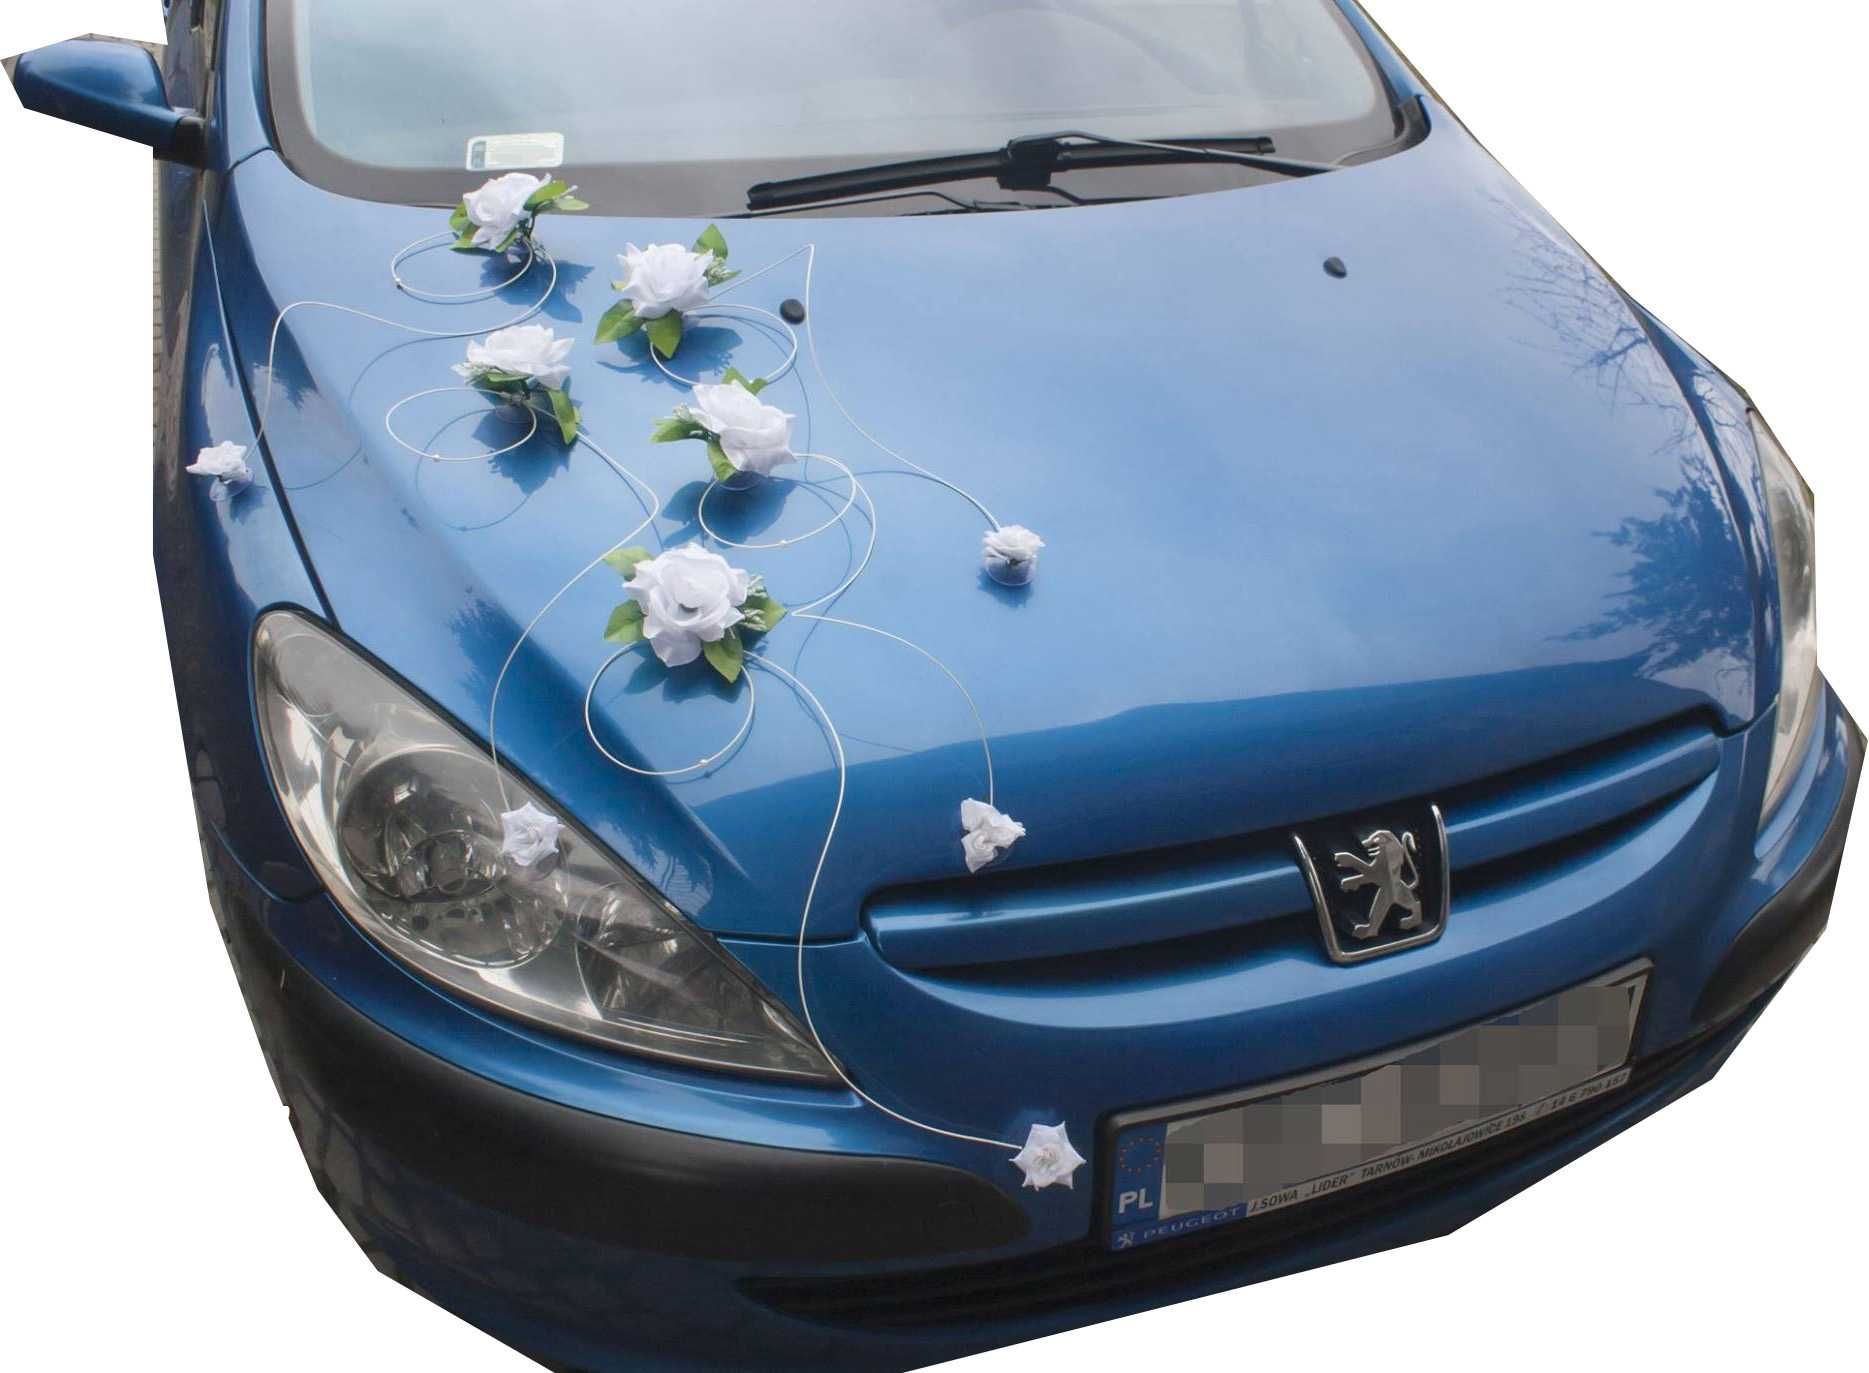 Dekoracja samochodu ozdoby na samochód ślubny Nr. 007